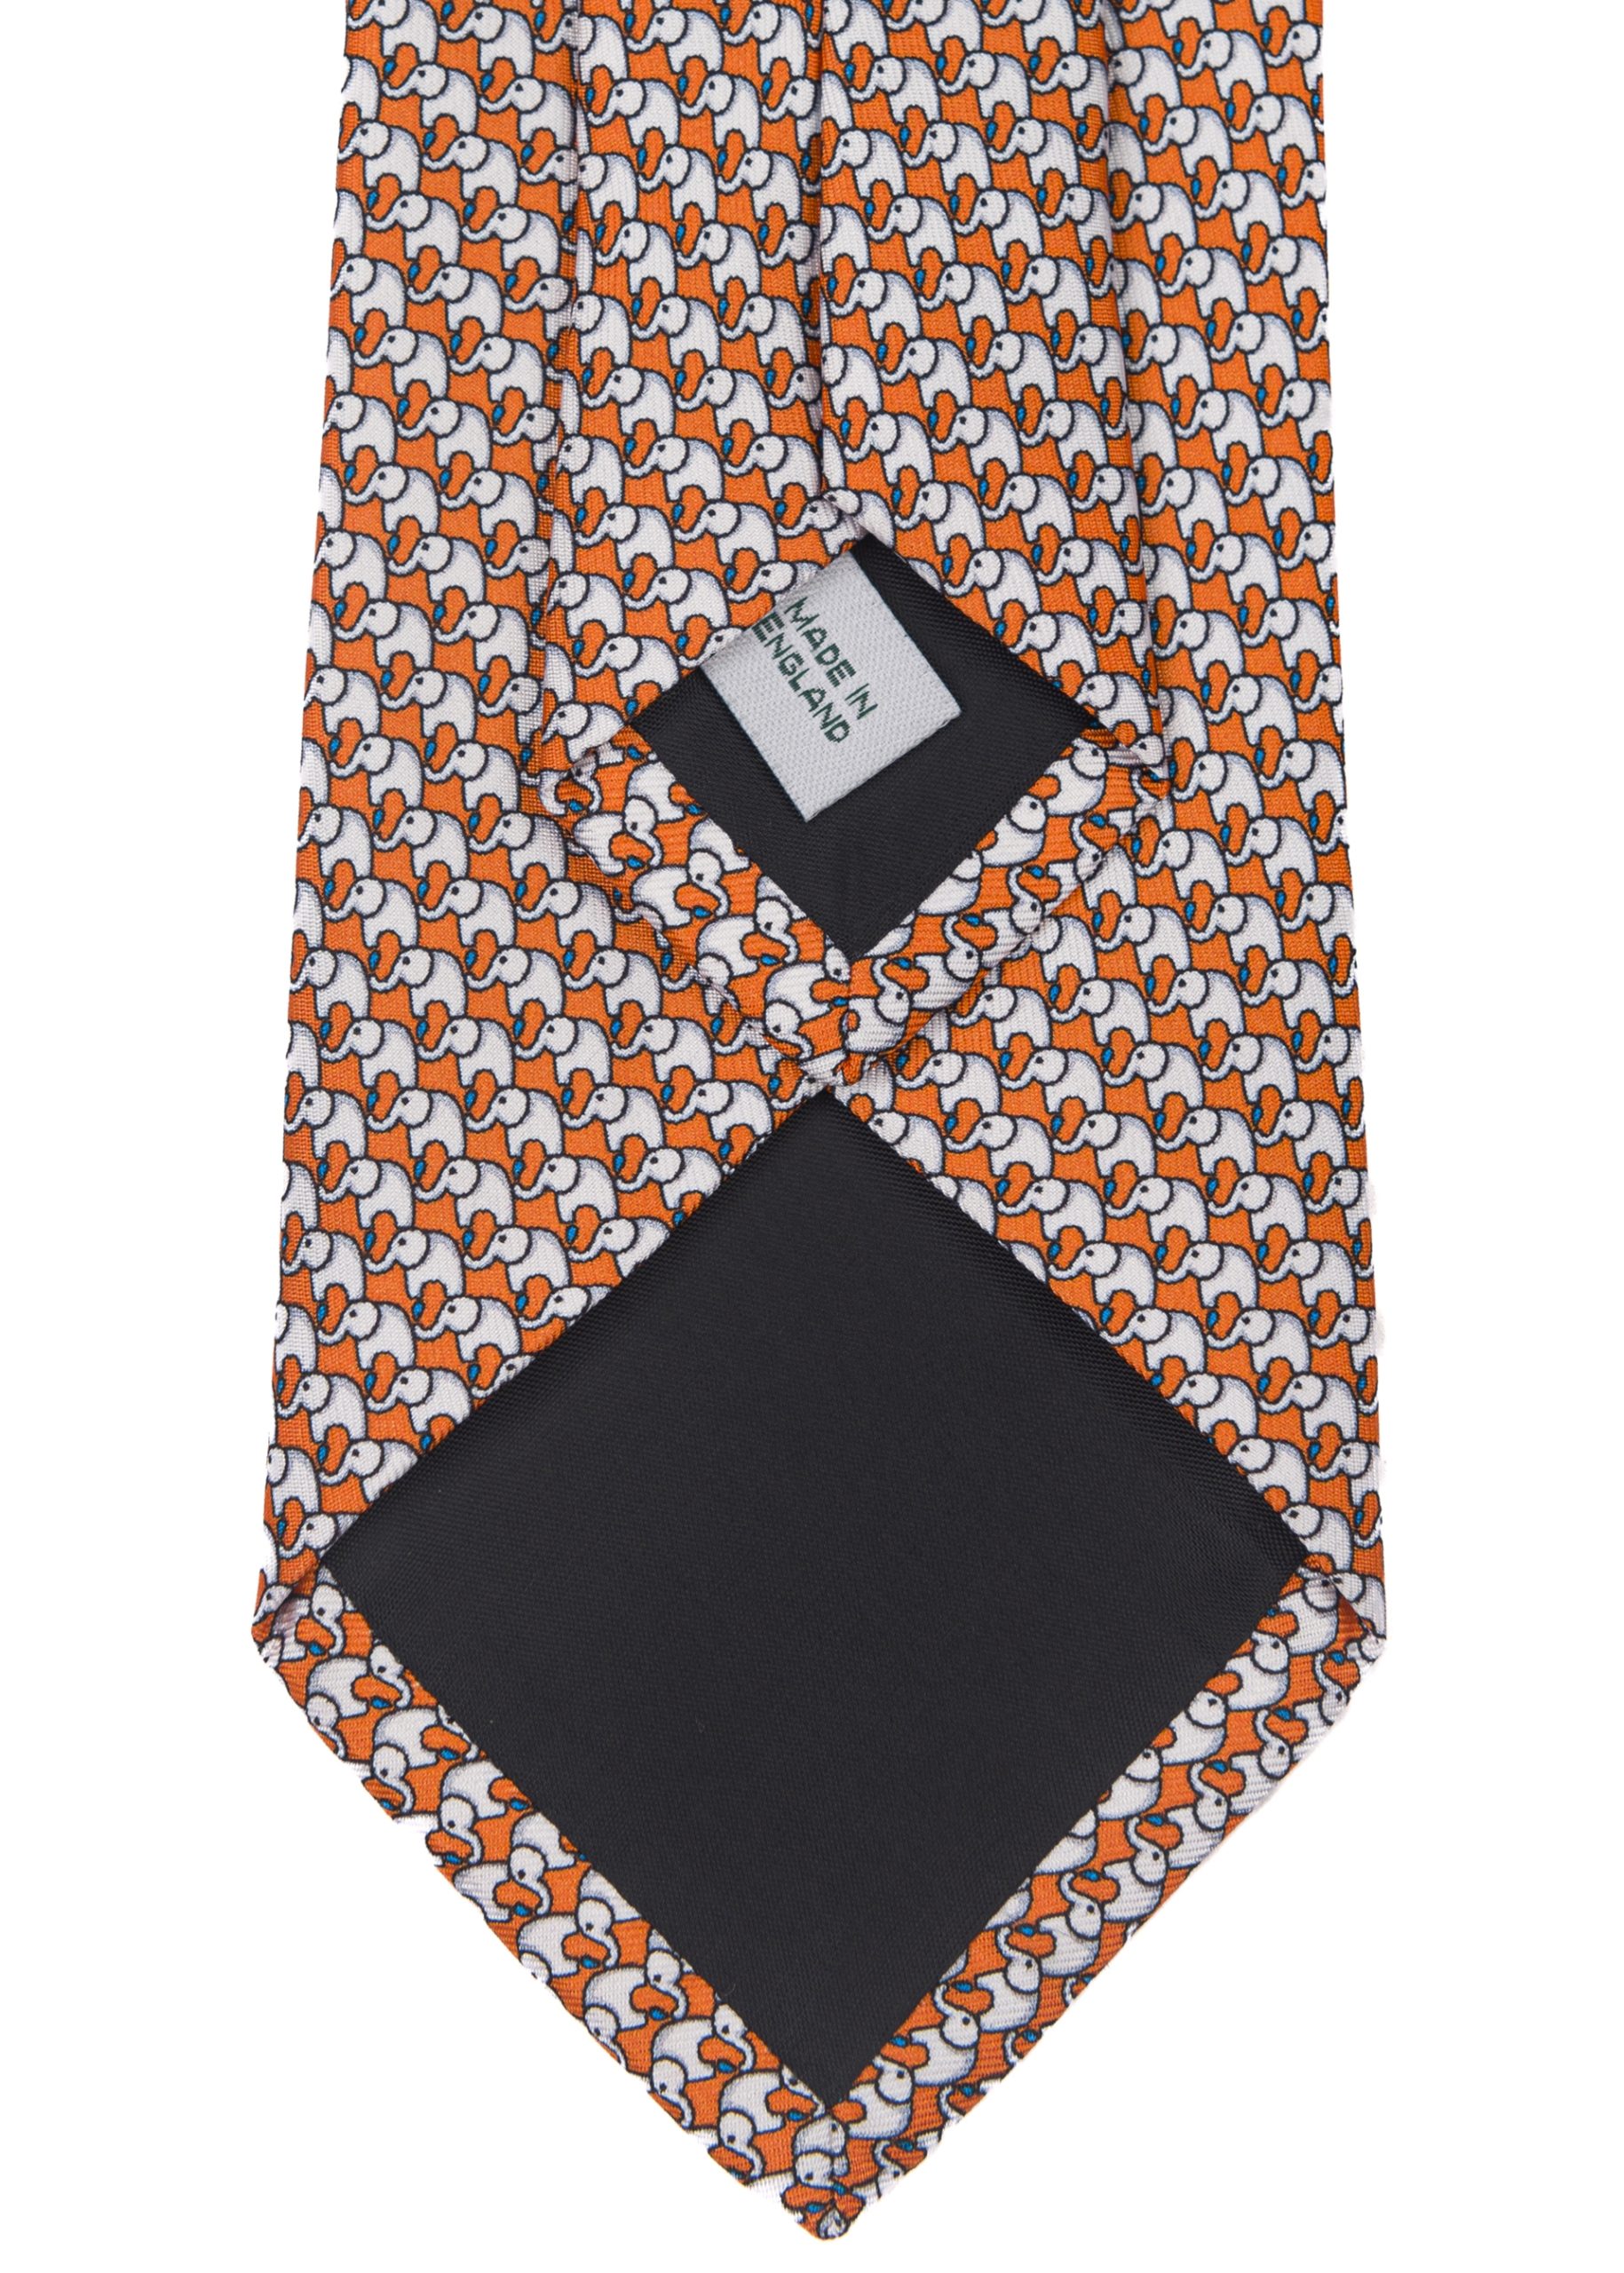 Roderick Charles orange animal print tie with elephants